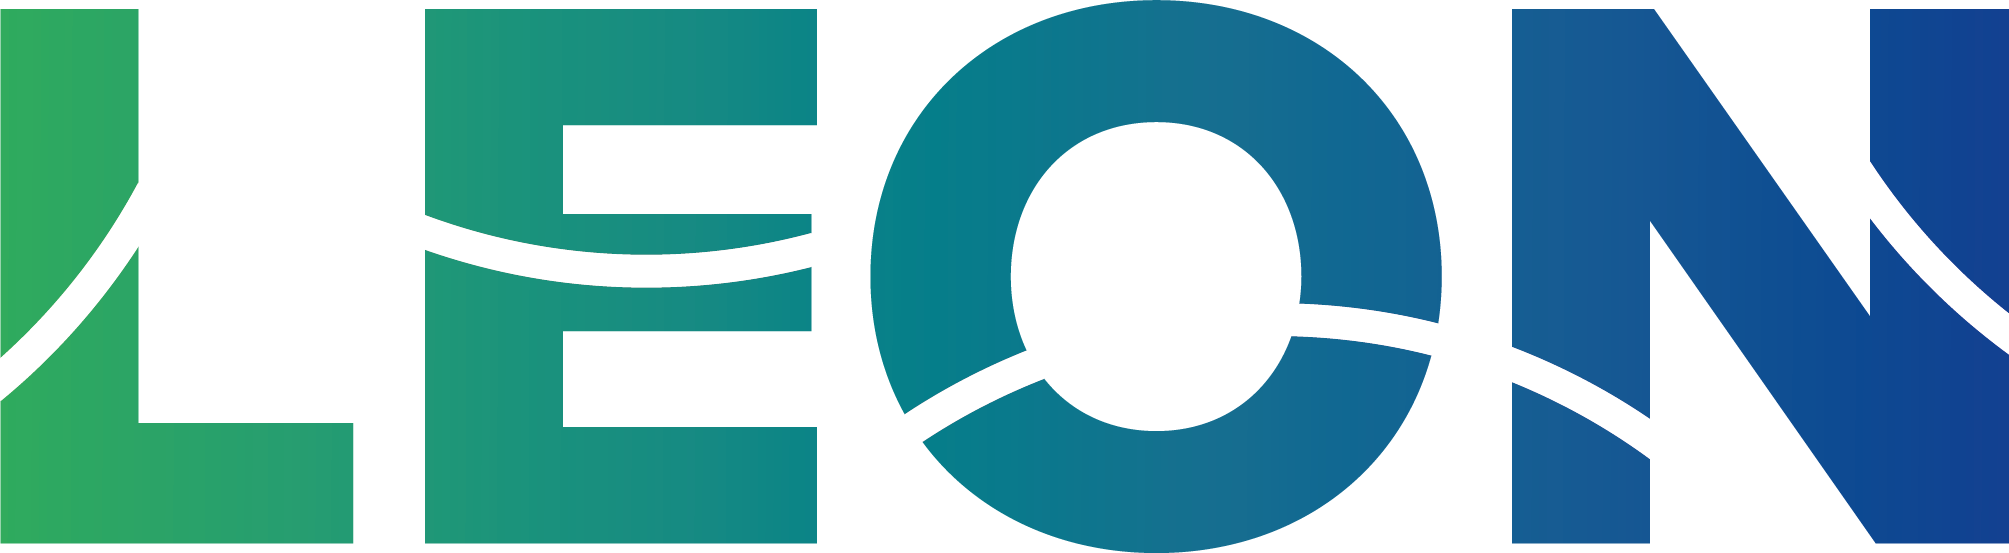 LEON Logo